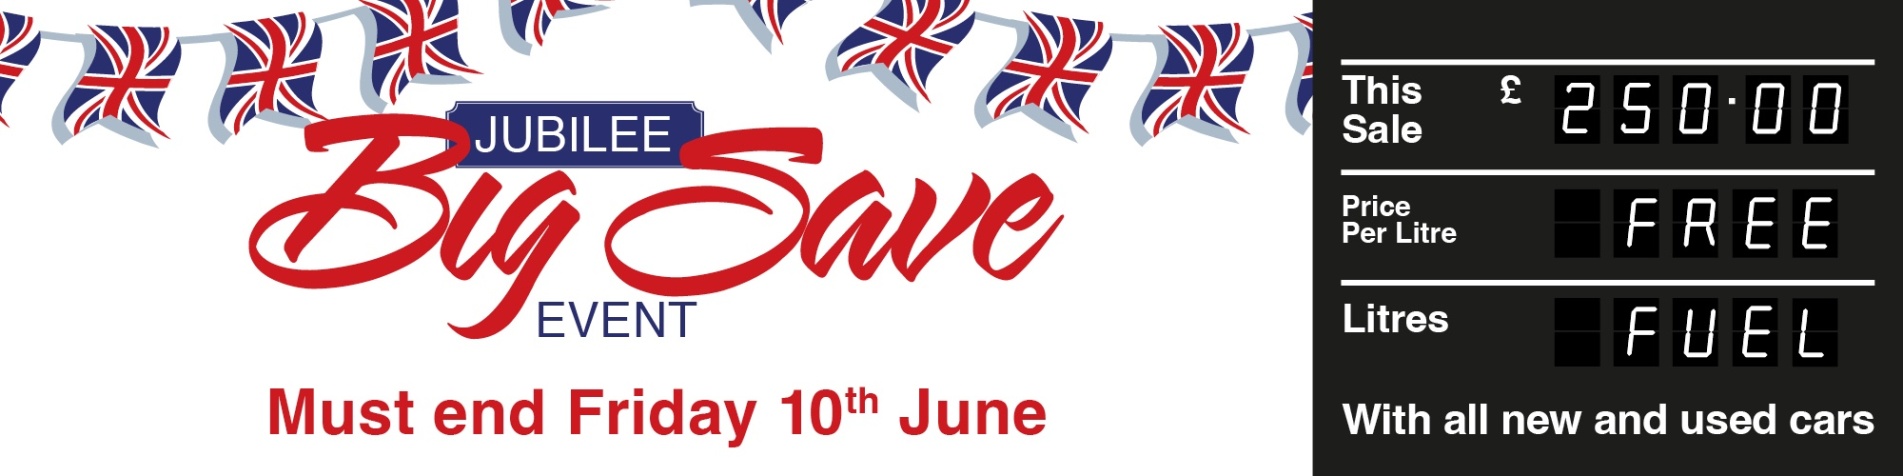 Jubilee Big Save Event